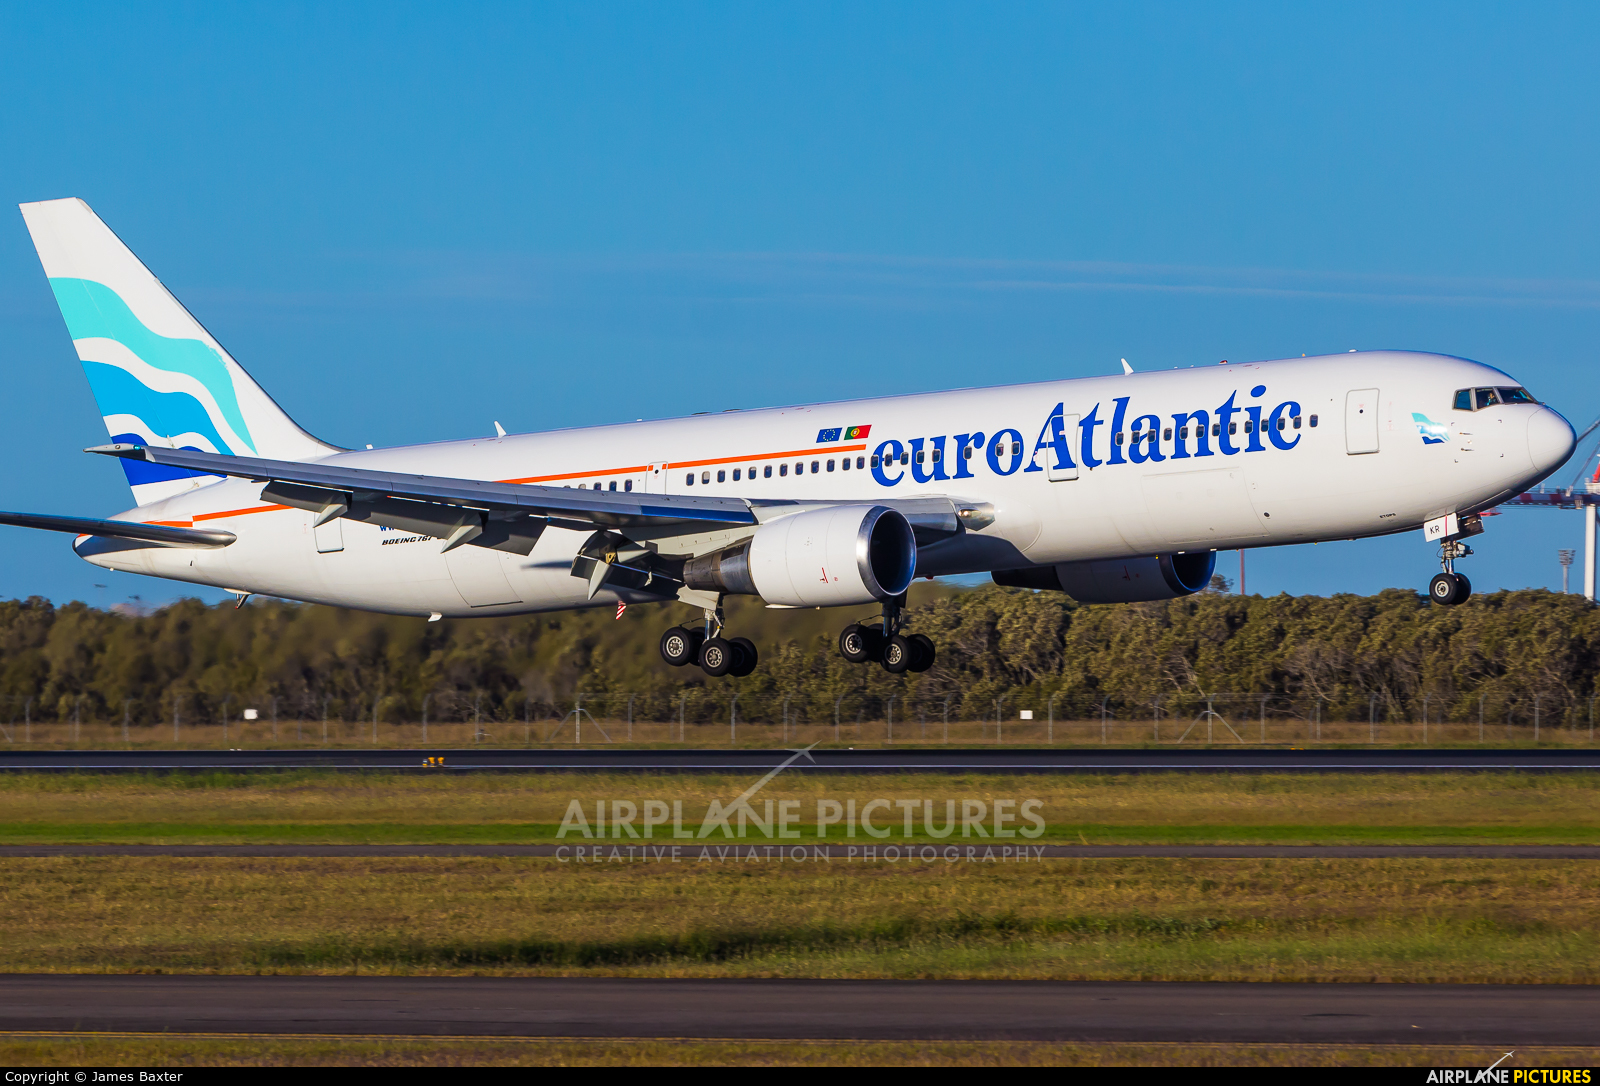 Euro Atlantic Airways CS-TKR aircraft at Brisbane, QLD